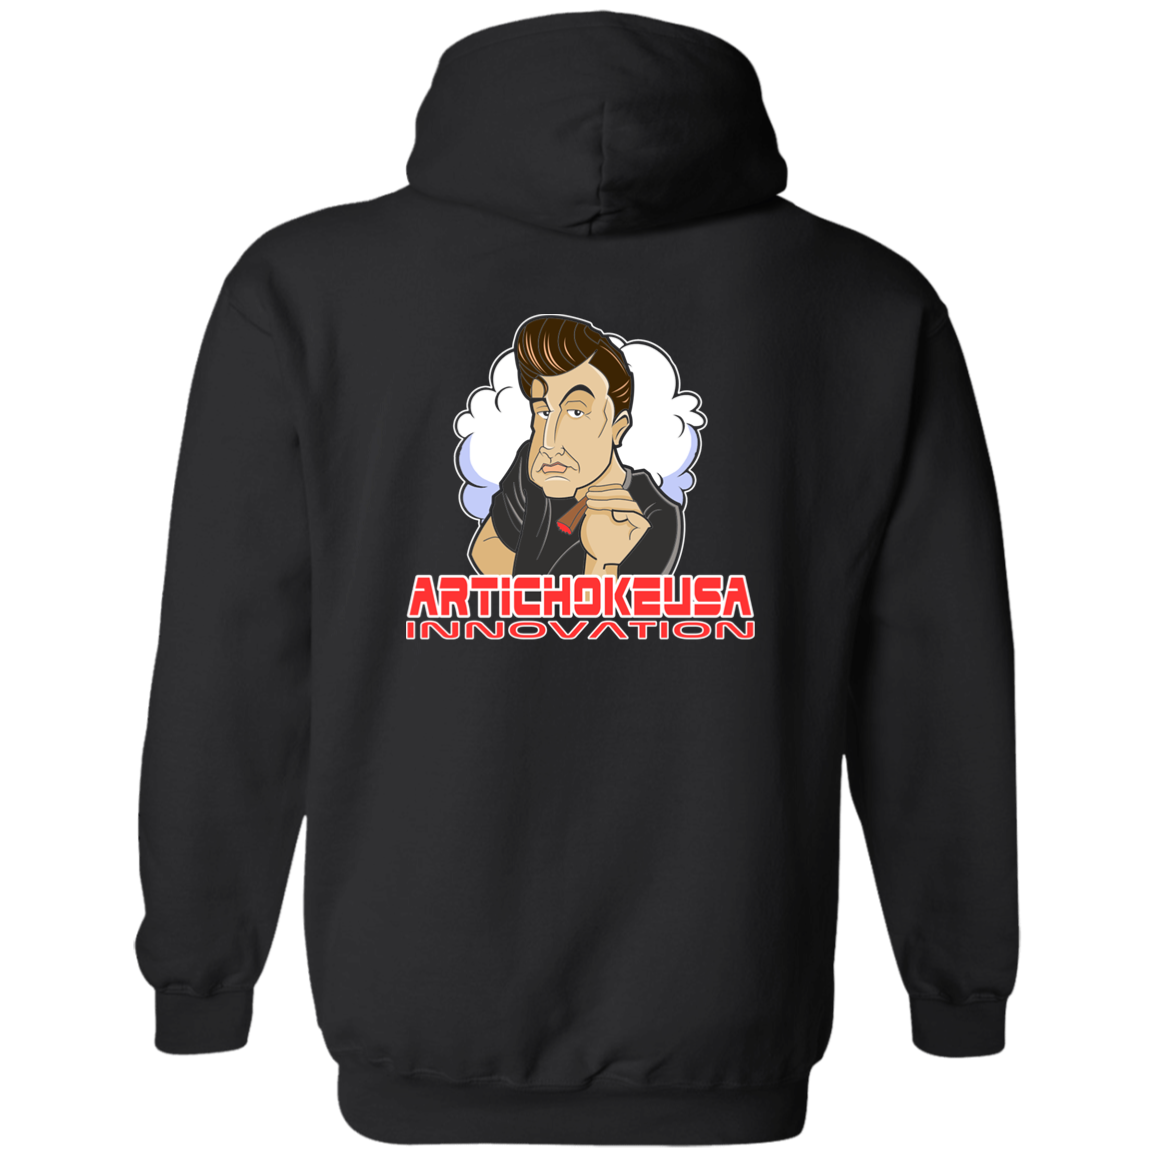 ArtichokeUSA Custom Design. Innovation. Elon Musk Parody Fan Art. Zip Up Hooded Sweatshirt